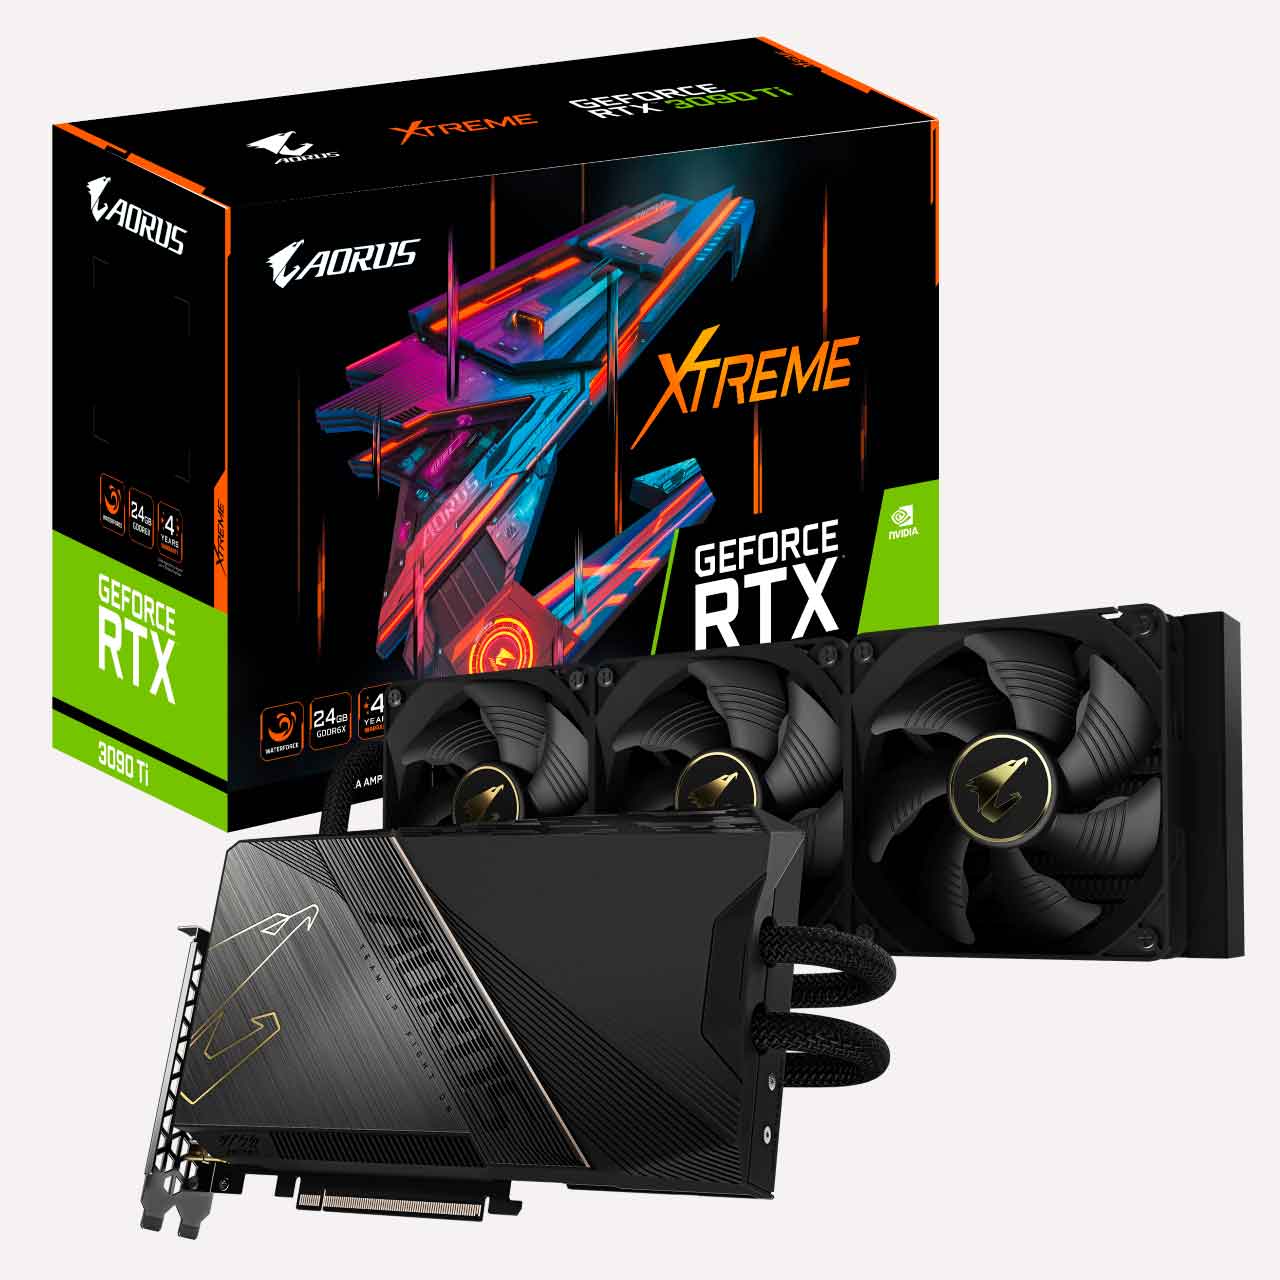 Gigabyte presents its GeForce RTX 3090 Ti